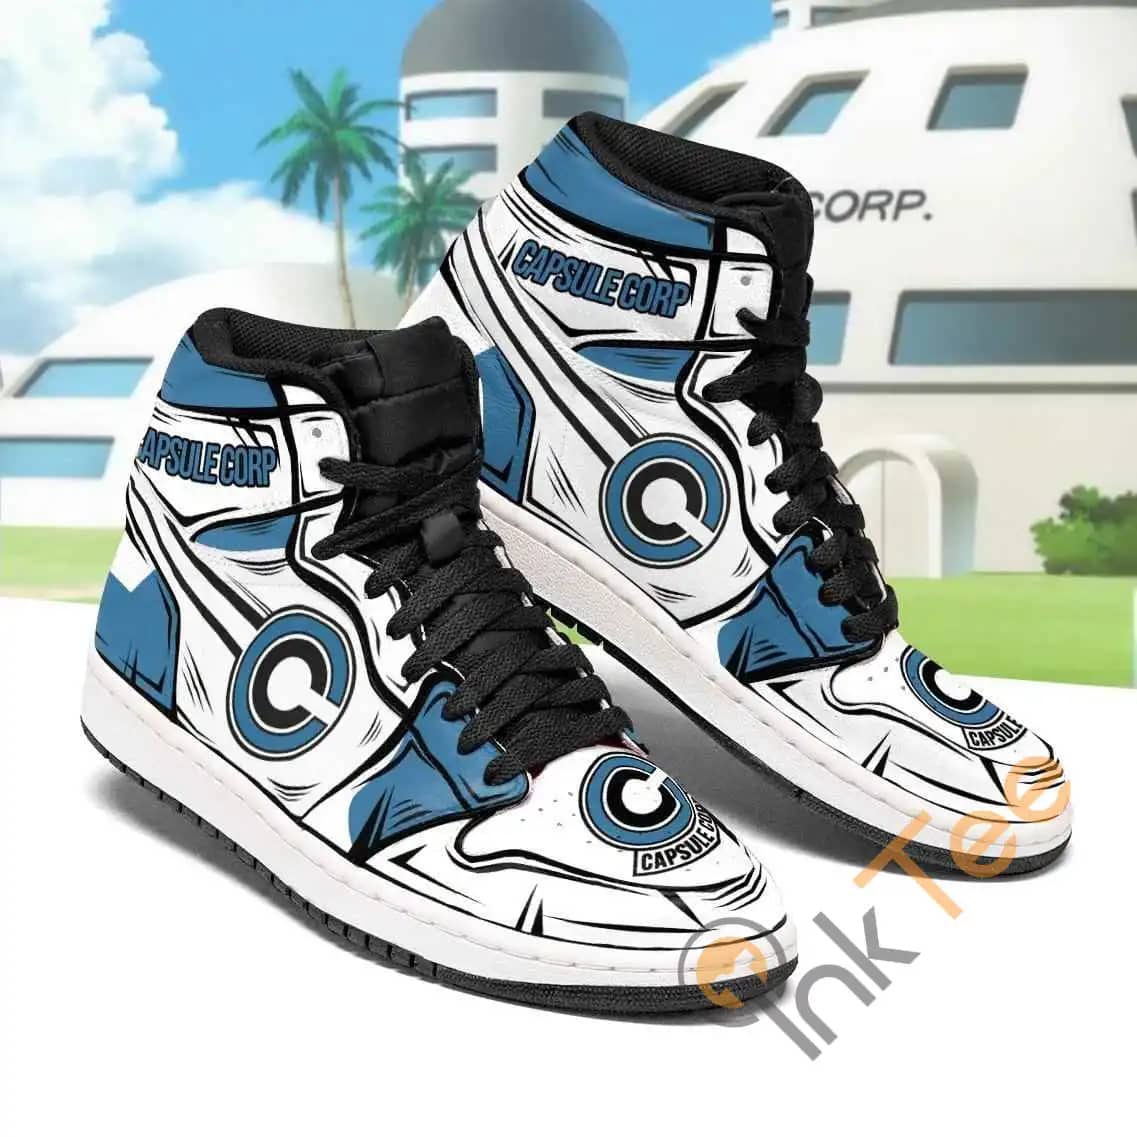 Capsule Corp Dragon Ball Z Anime Sneakers Air Jordan Shoes